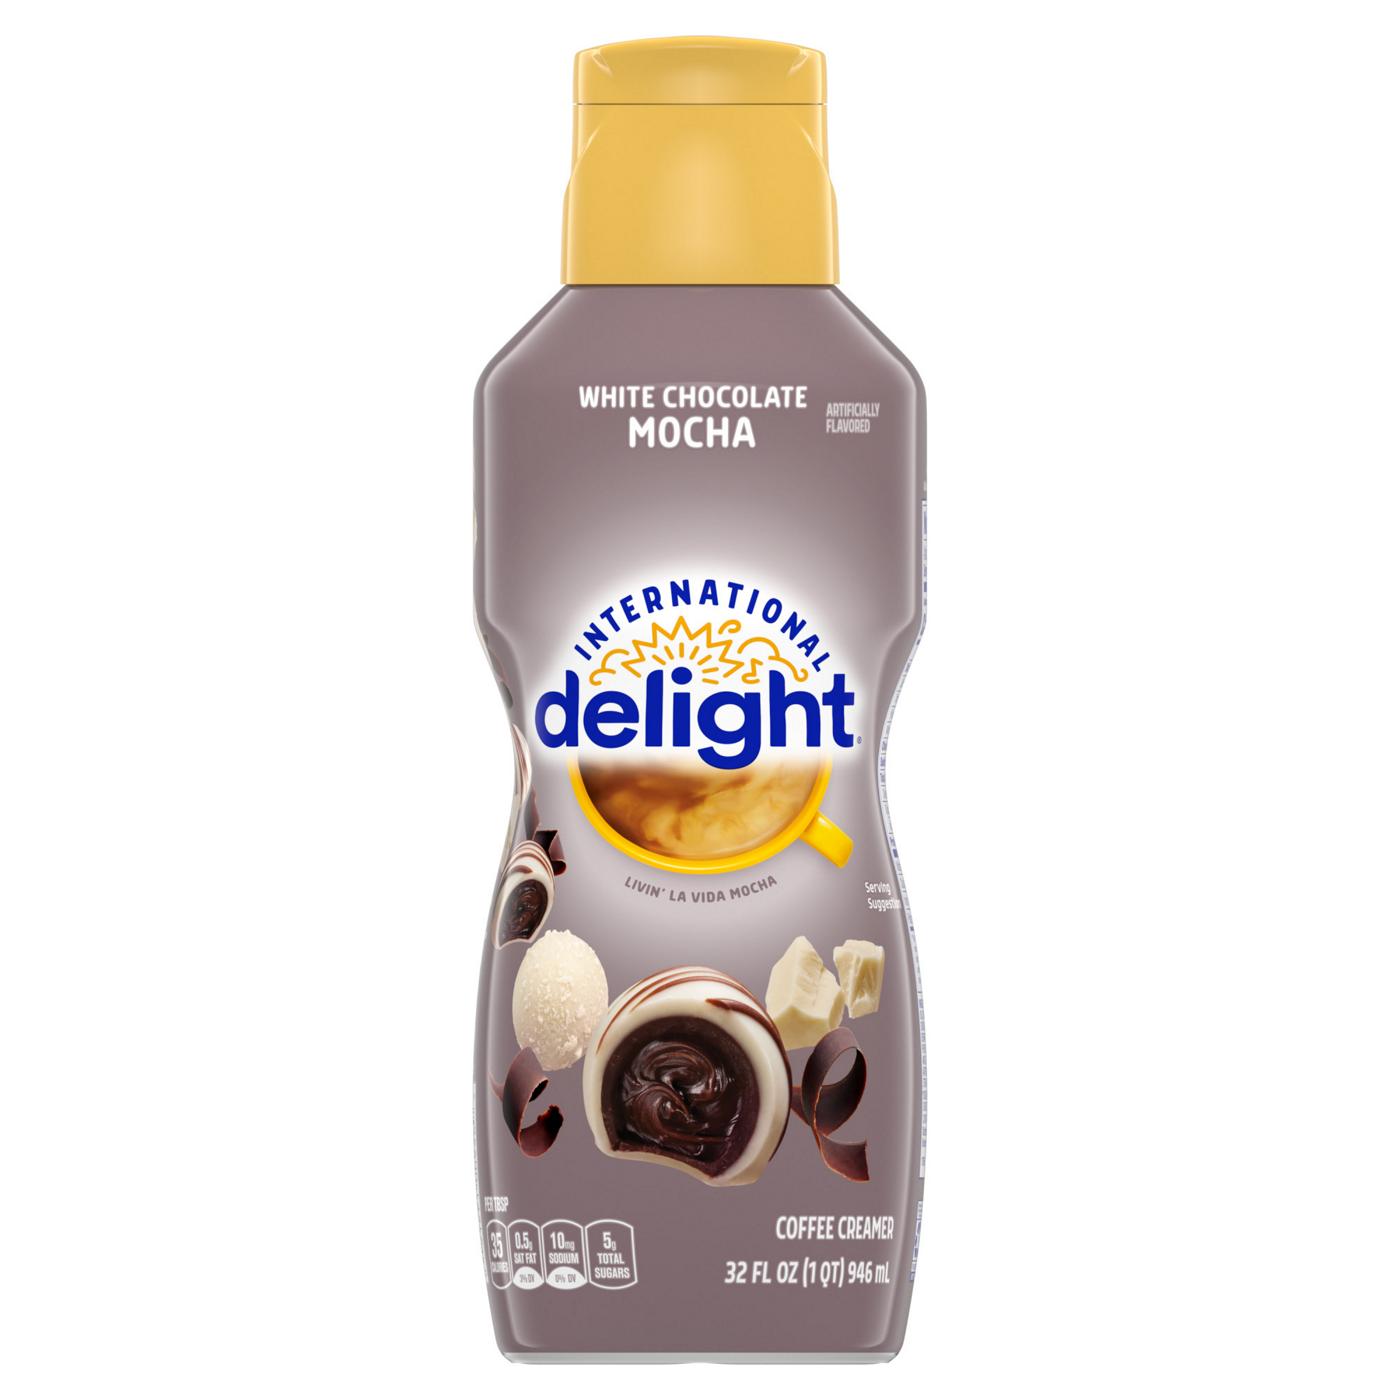 International Delight White Chocolate Mocha Coffee Creamer; image 1 of 2